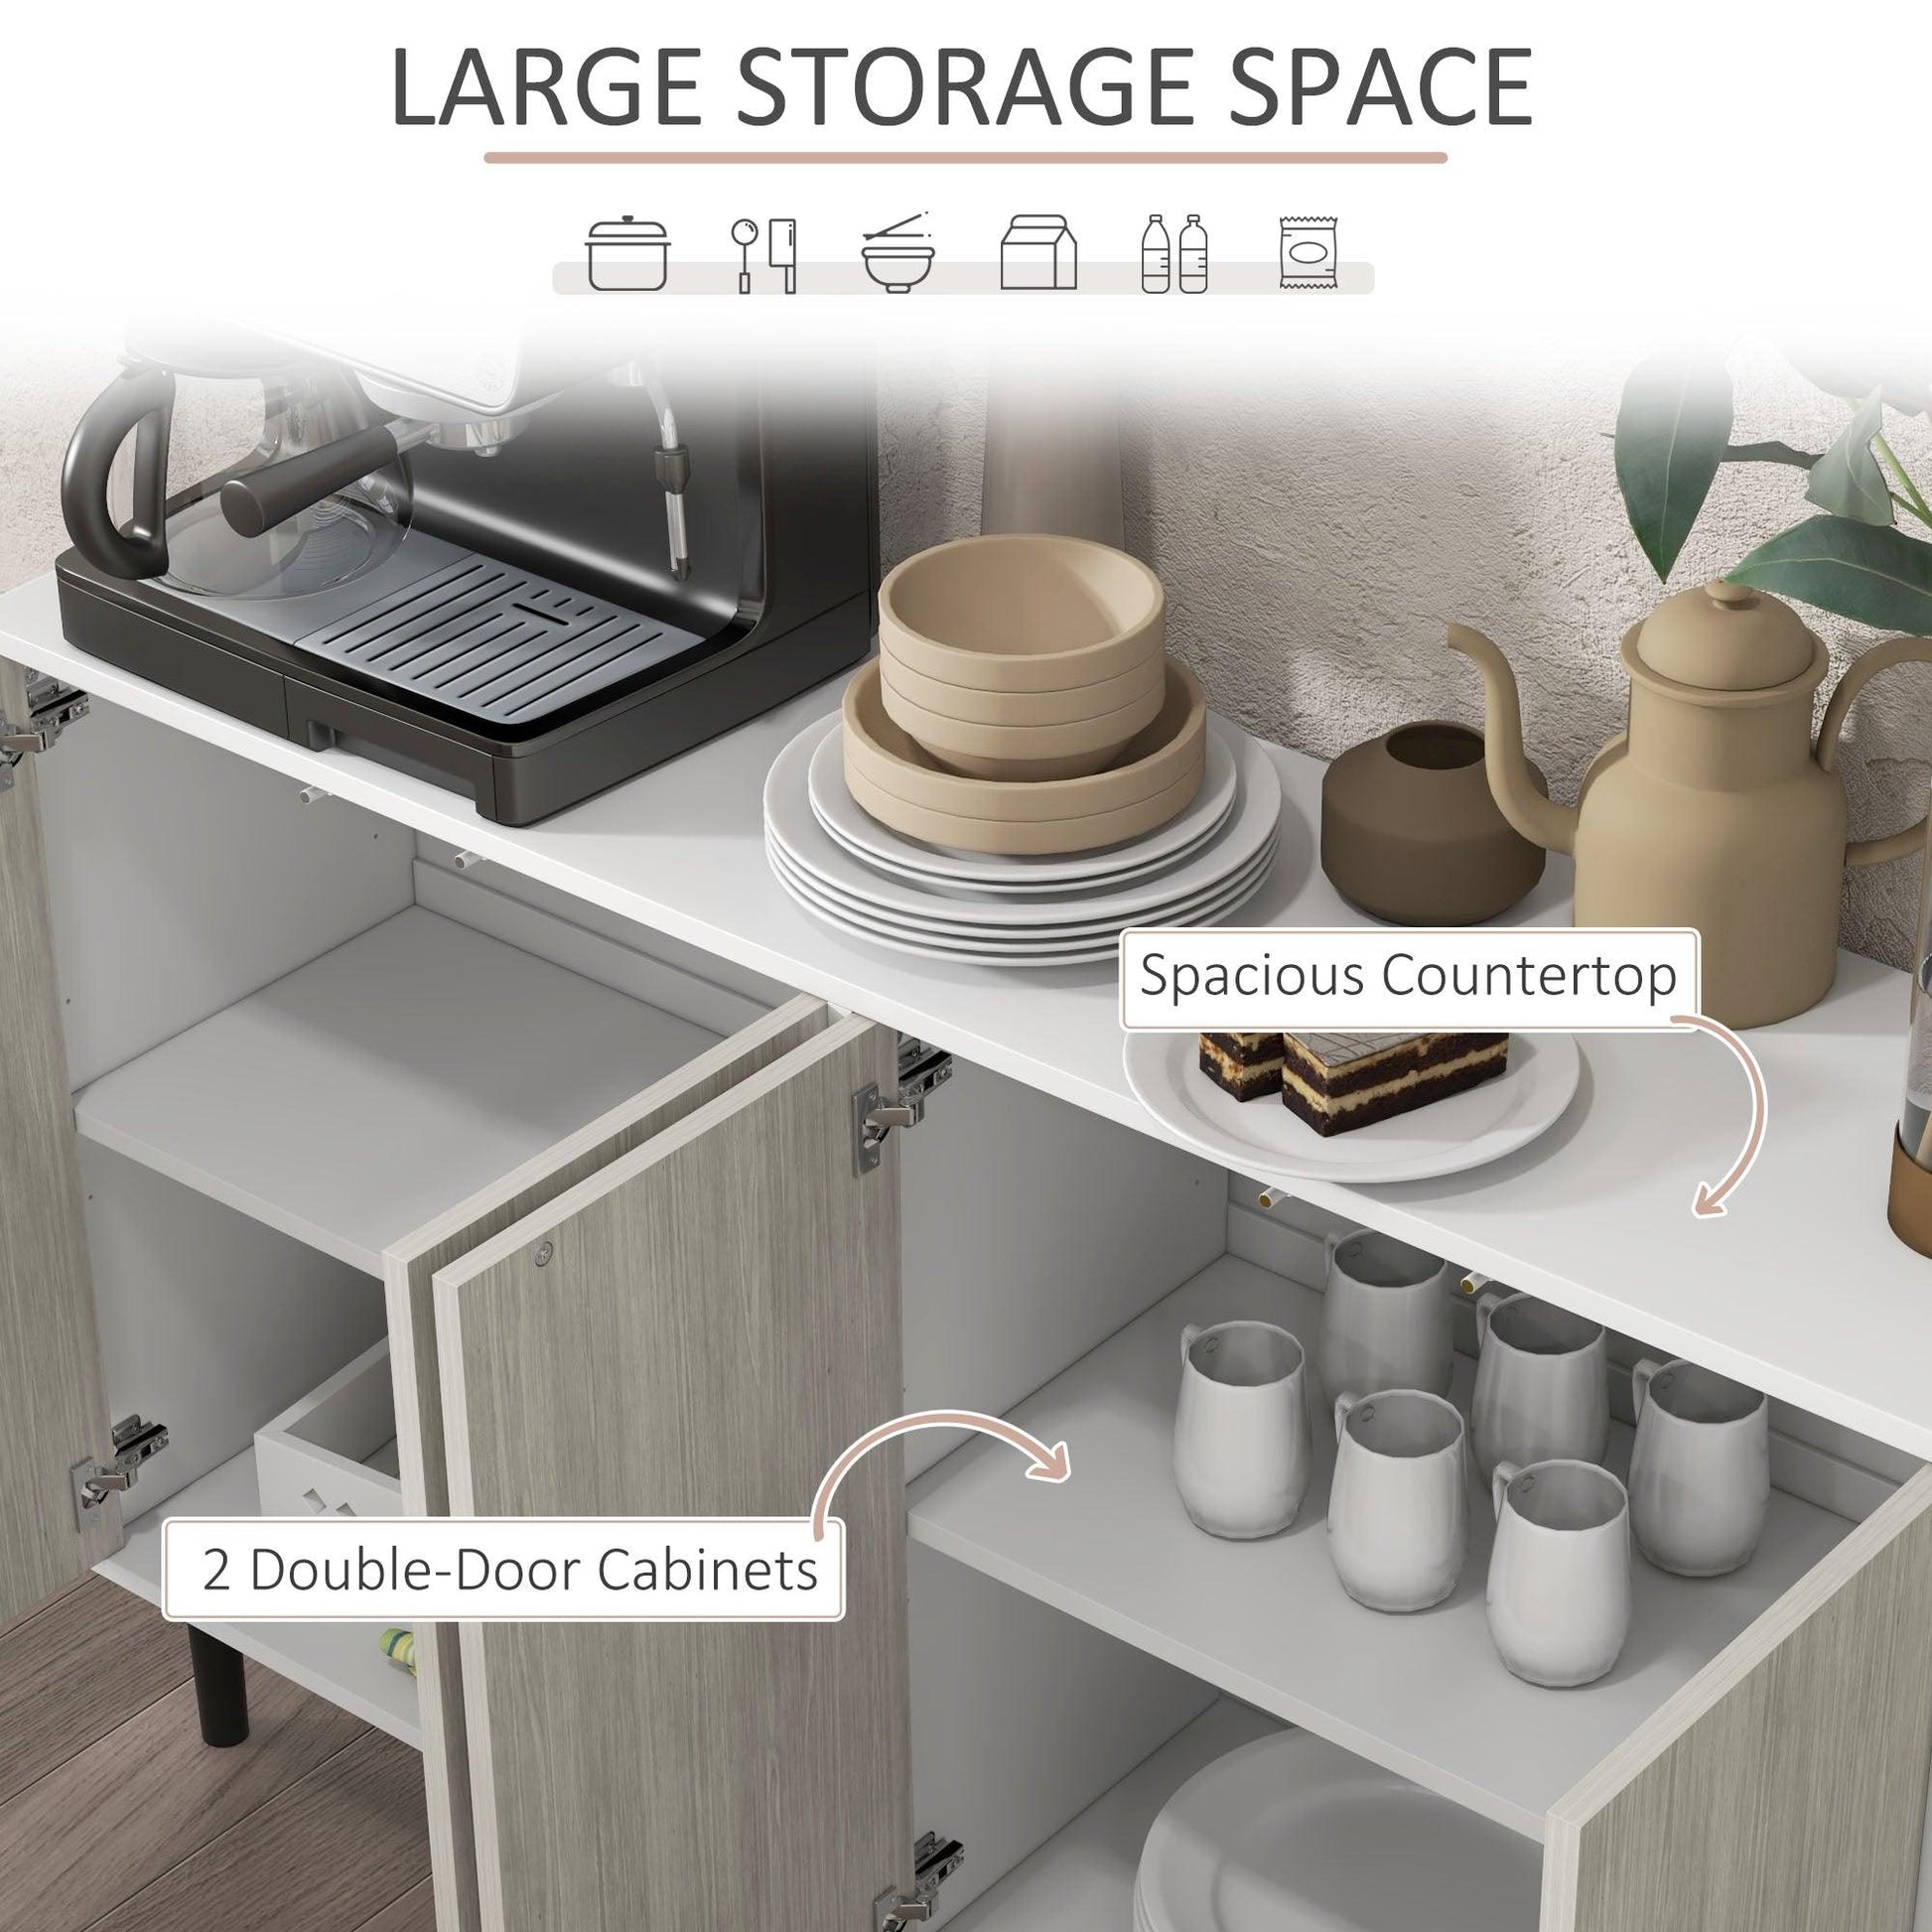 HOMCOM Kitchen Sideboard Storage Cabinet for Living Room with Adjustable Shelves 4 Doors and Pine Wood Legs White - ALL4U RETAILER LTD